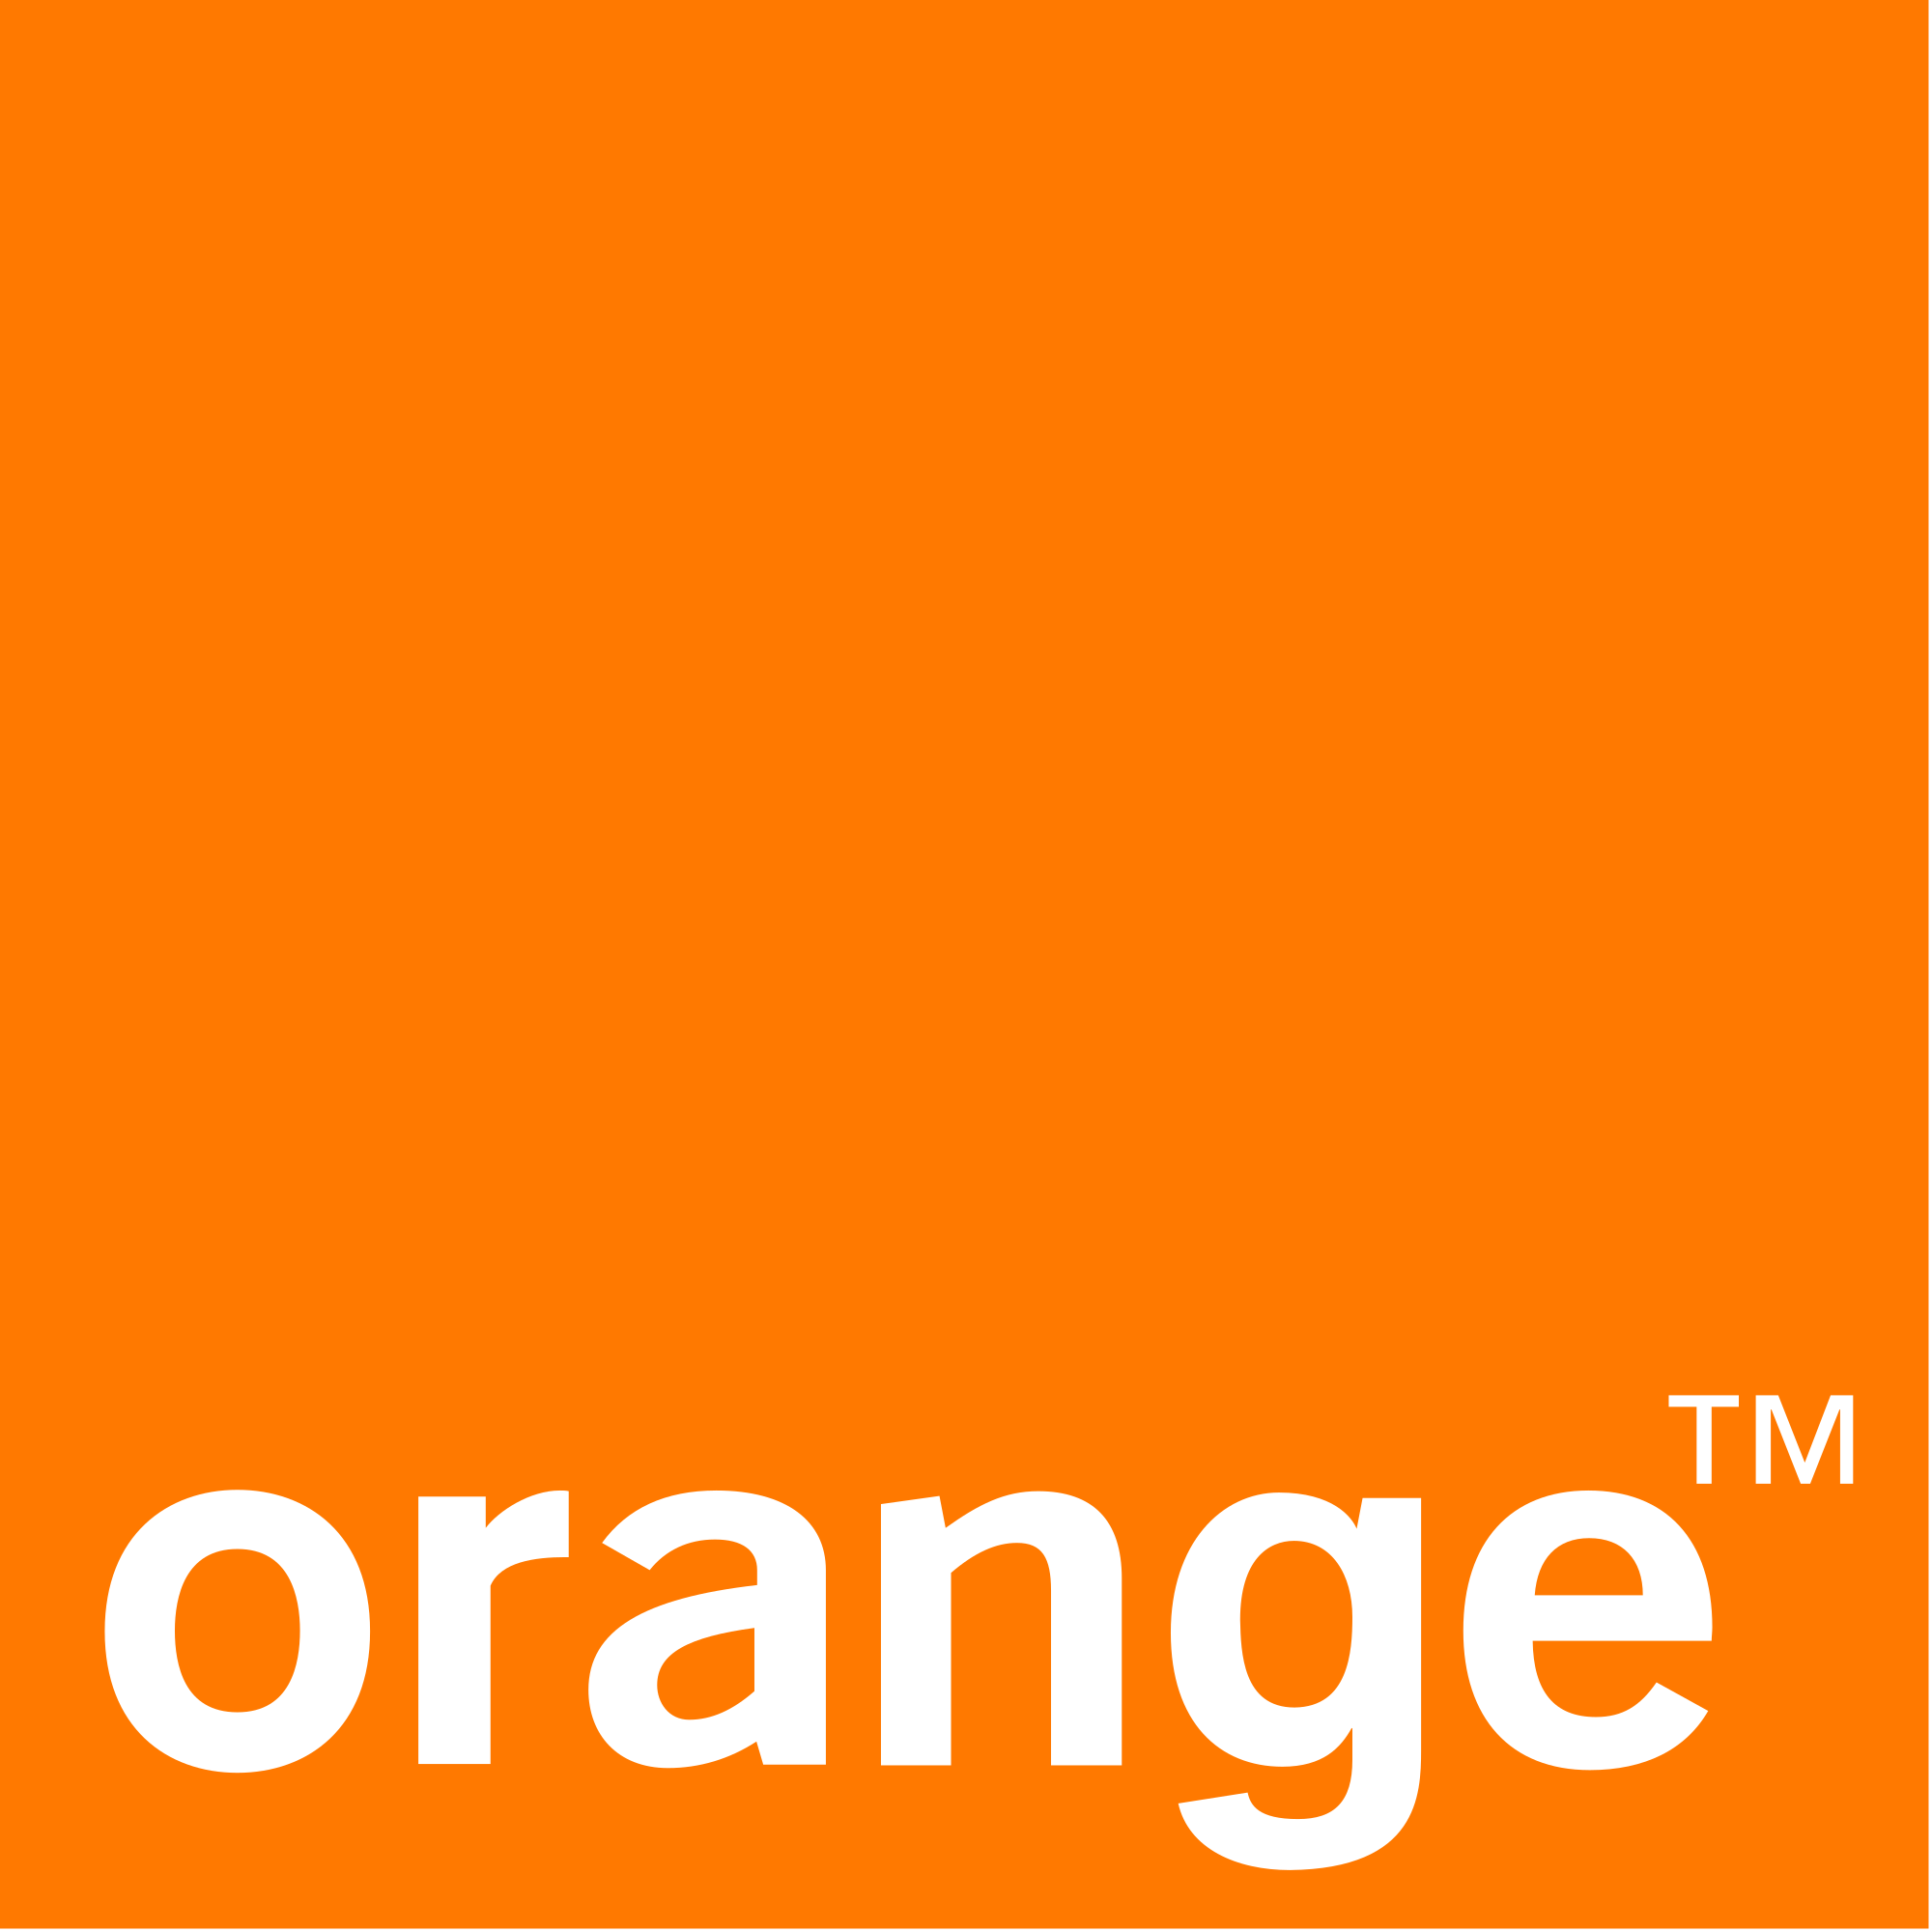 Orange maro photo